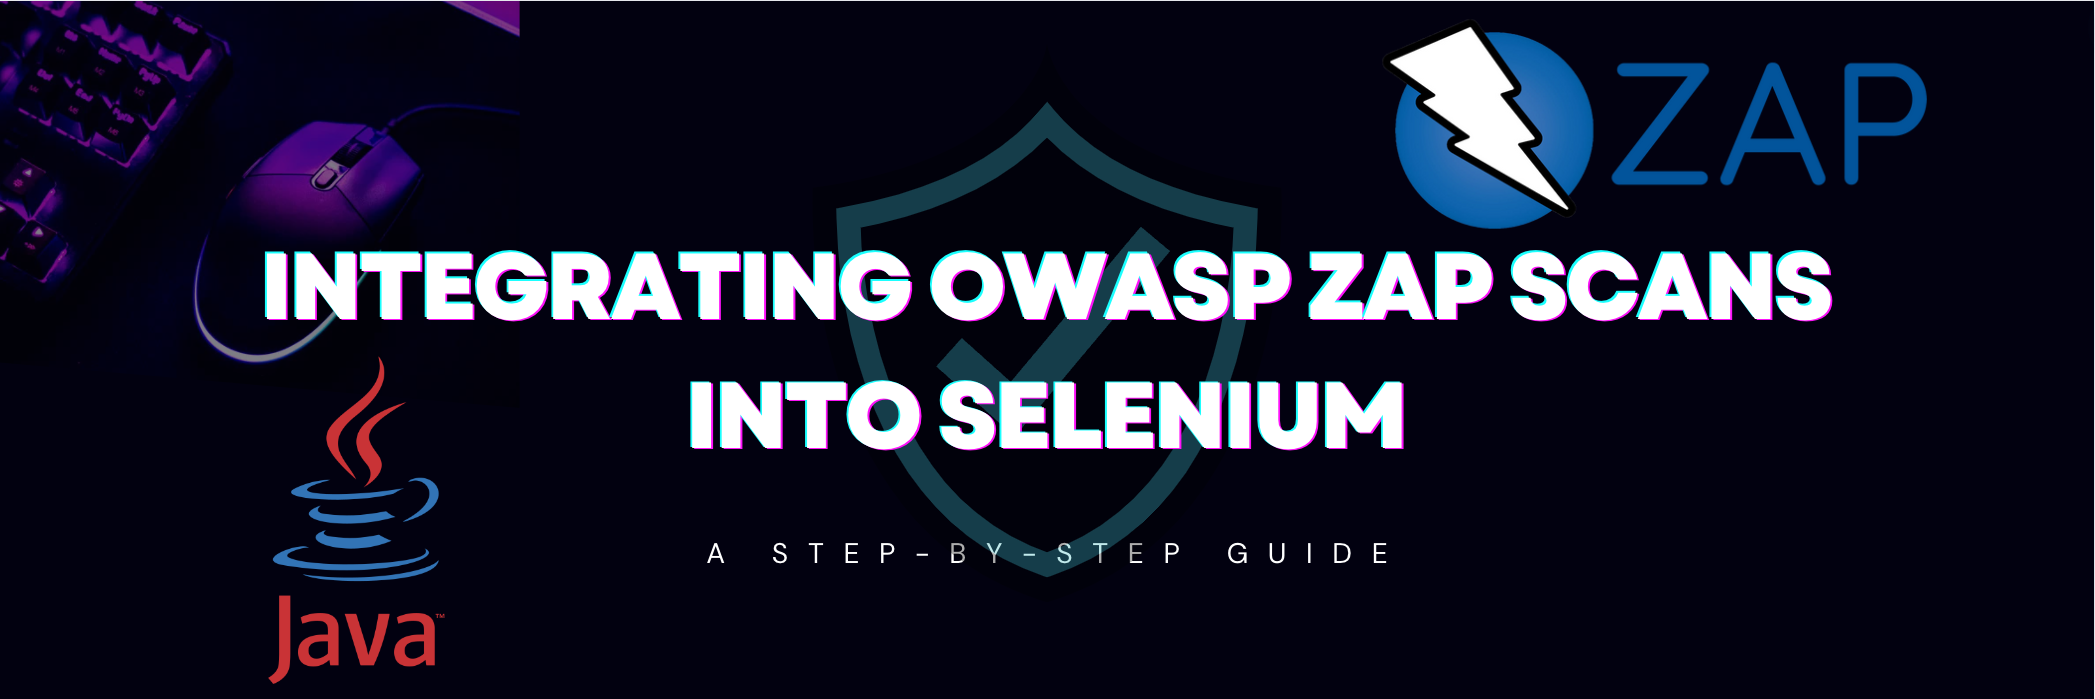 Integrating OWASP ZAP with Selenium Tests